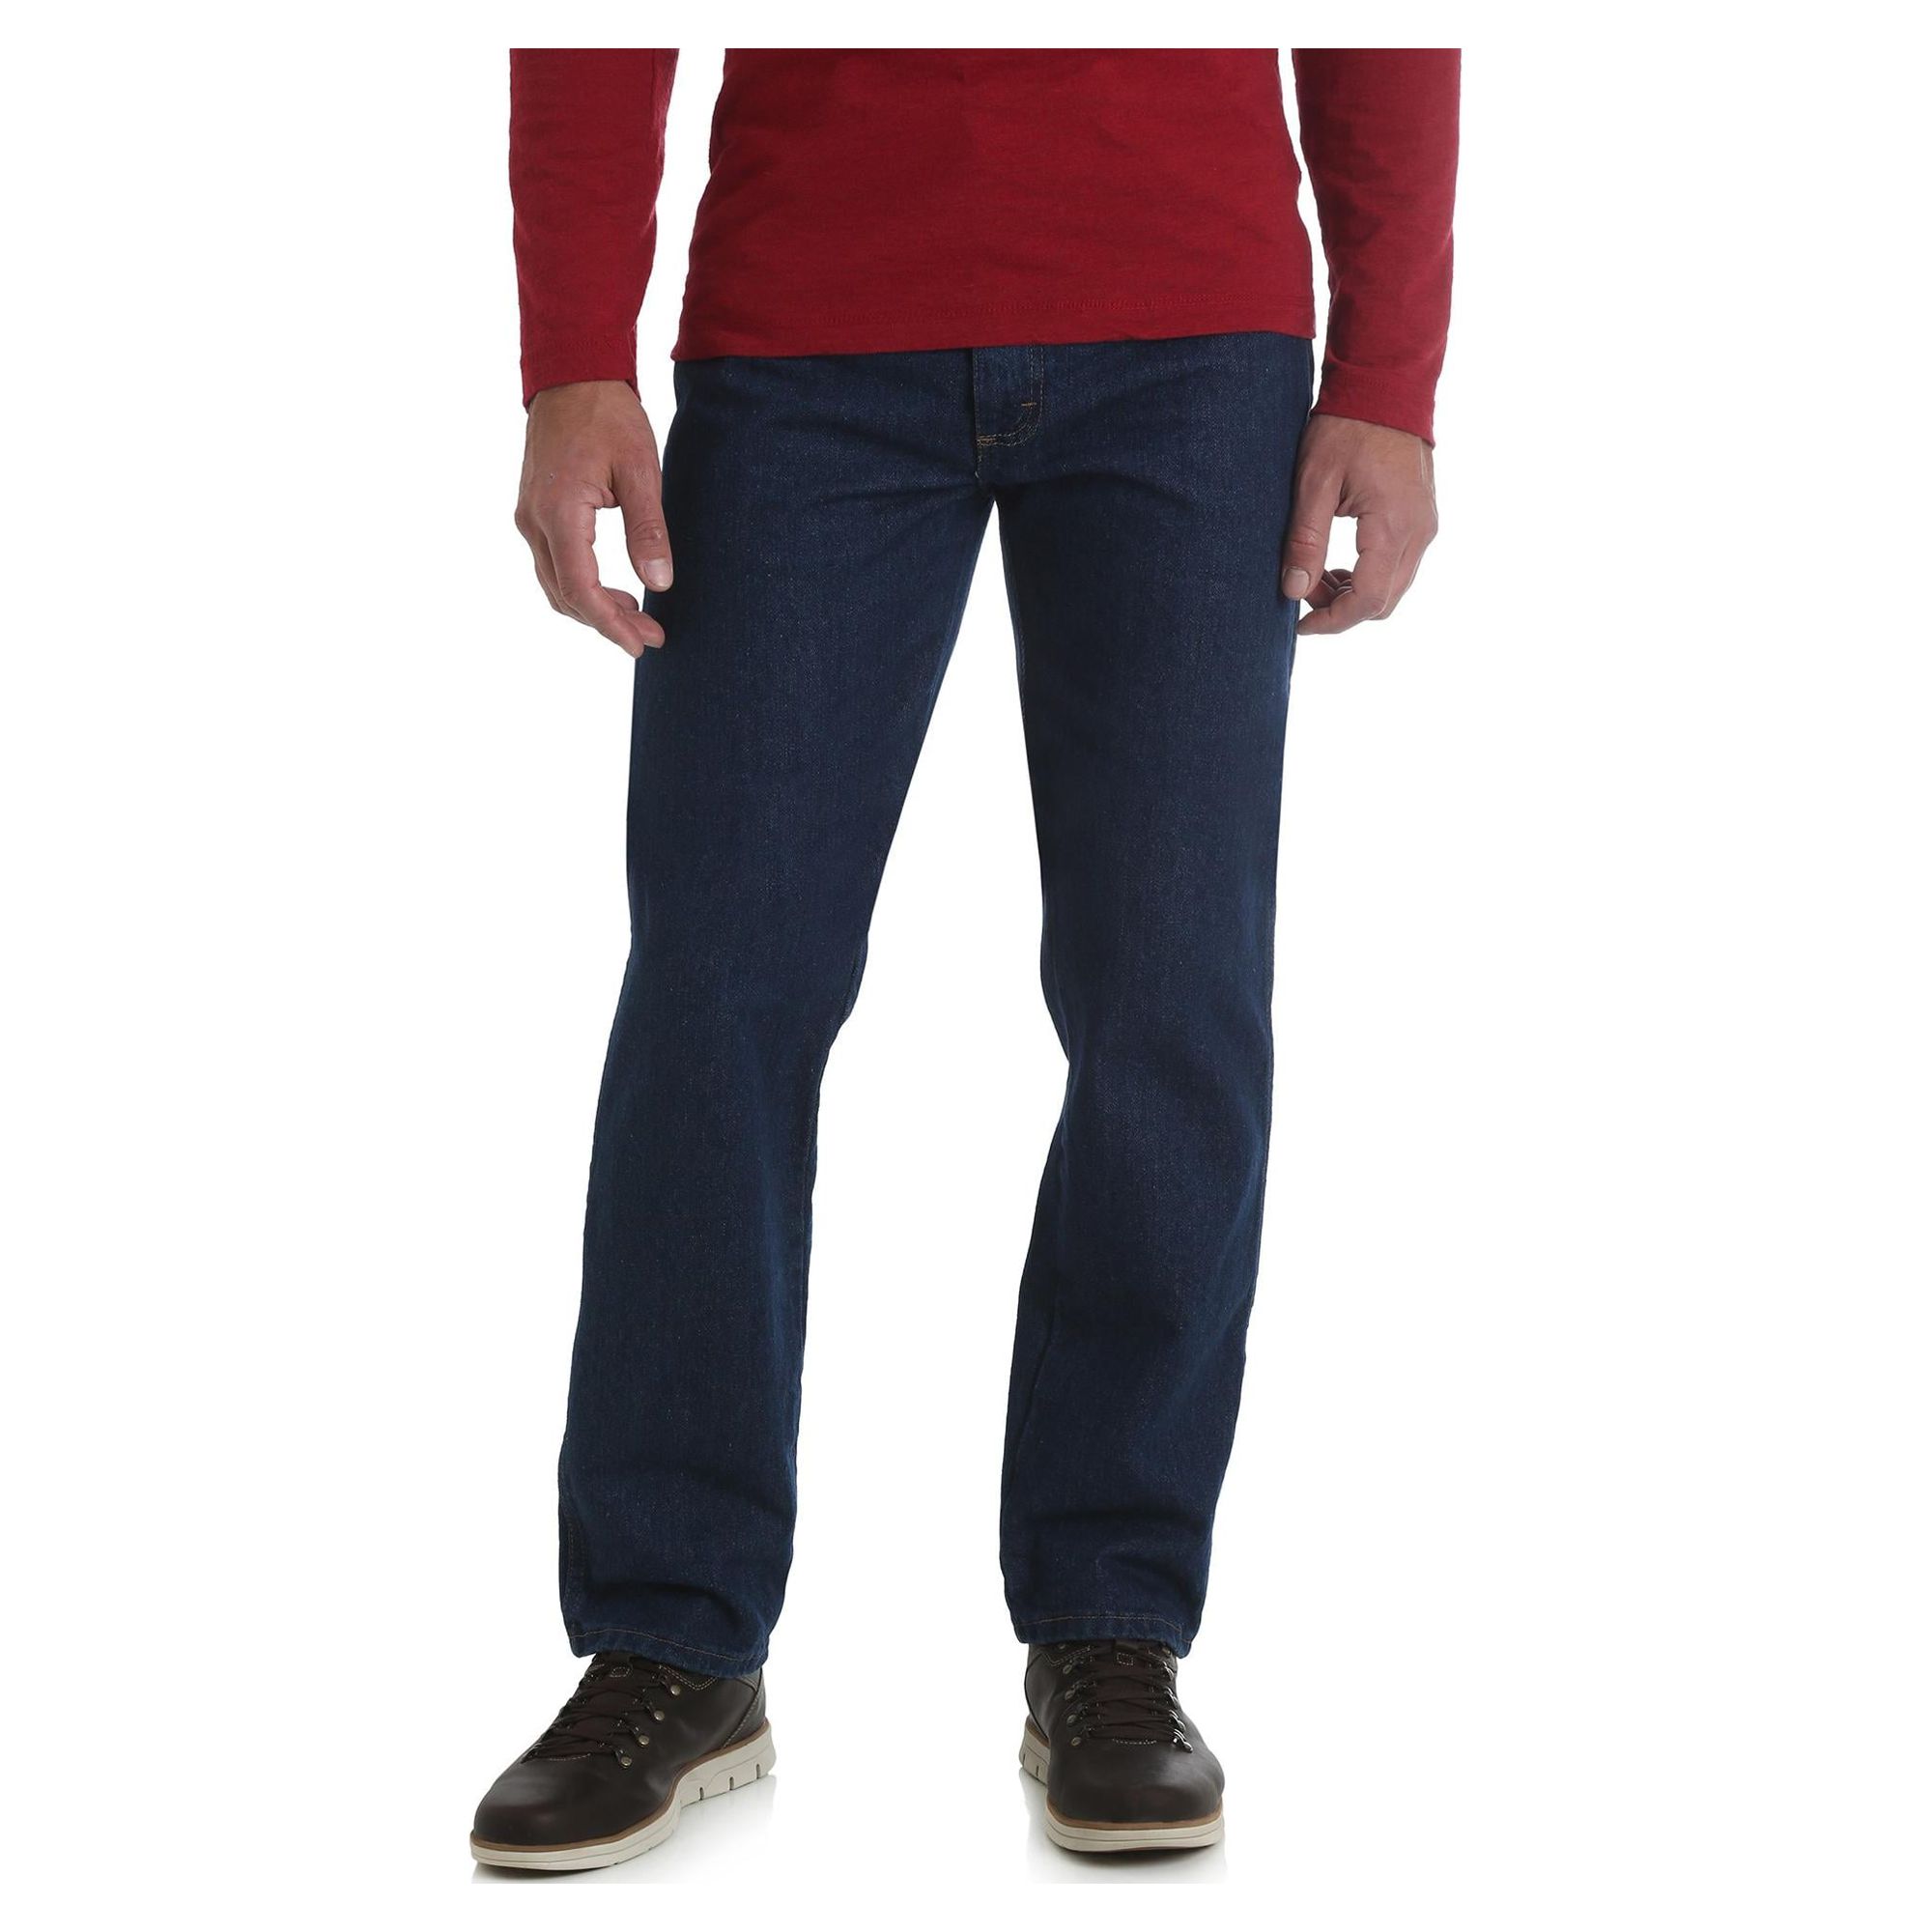 Wrangler Rustler Men's and Big Men's Regular Fit Jeans - image 1 of 7